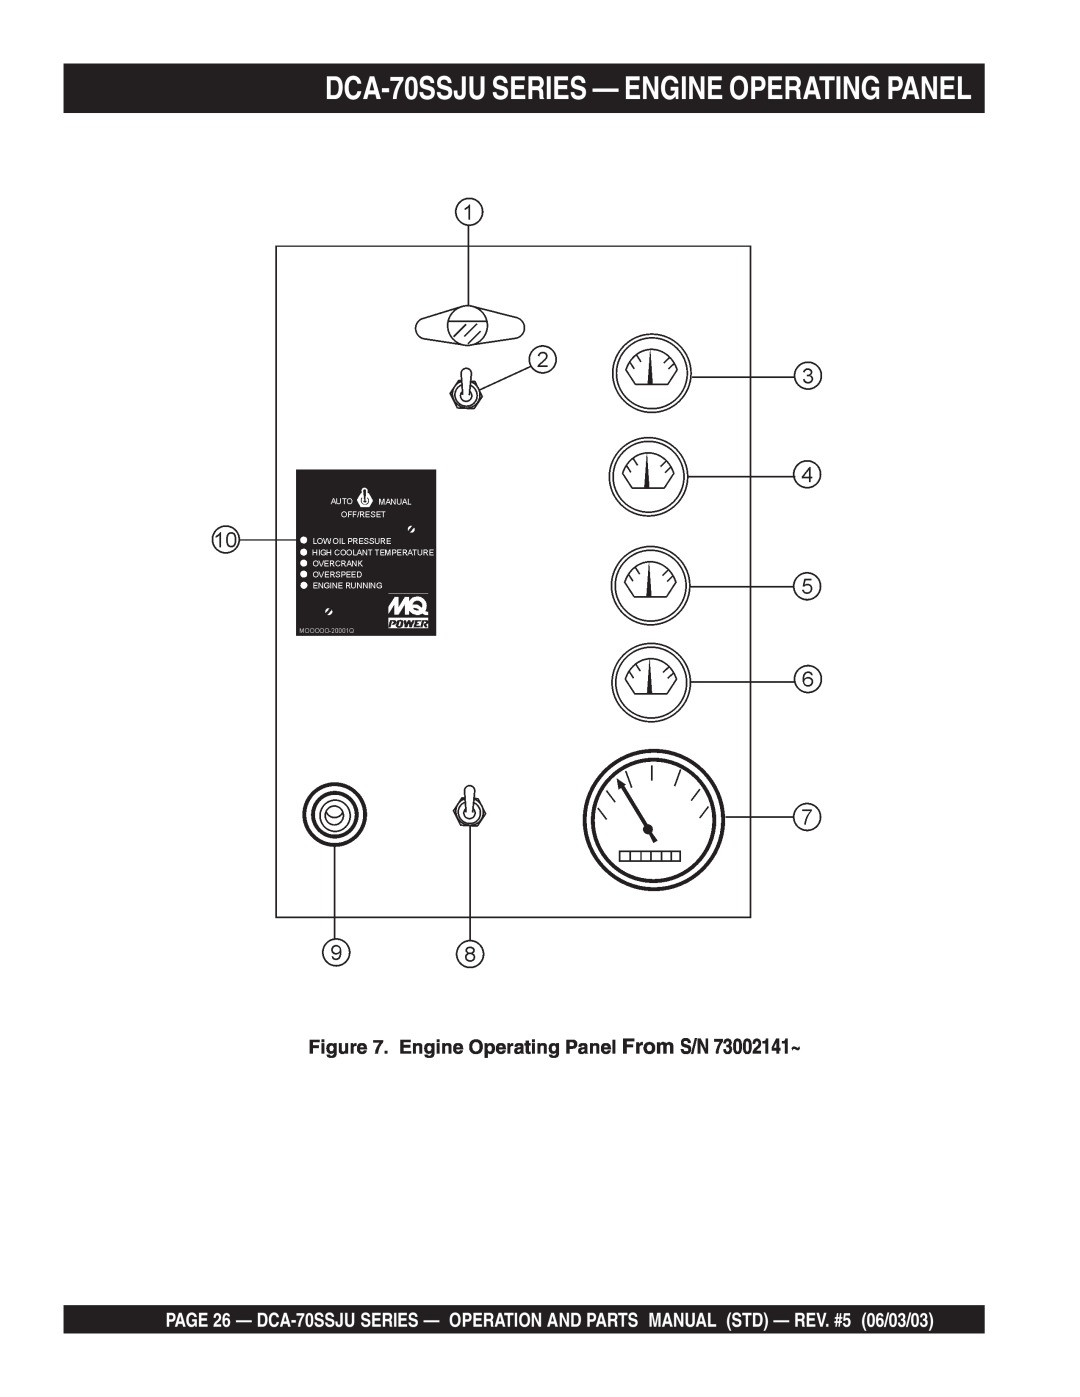 Multiquip operation manual DCA-70SSJUSERIES — ENGINE OPERATING PANEL 